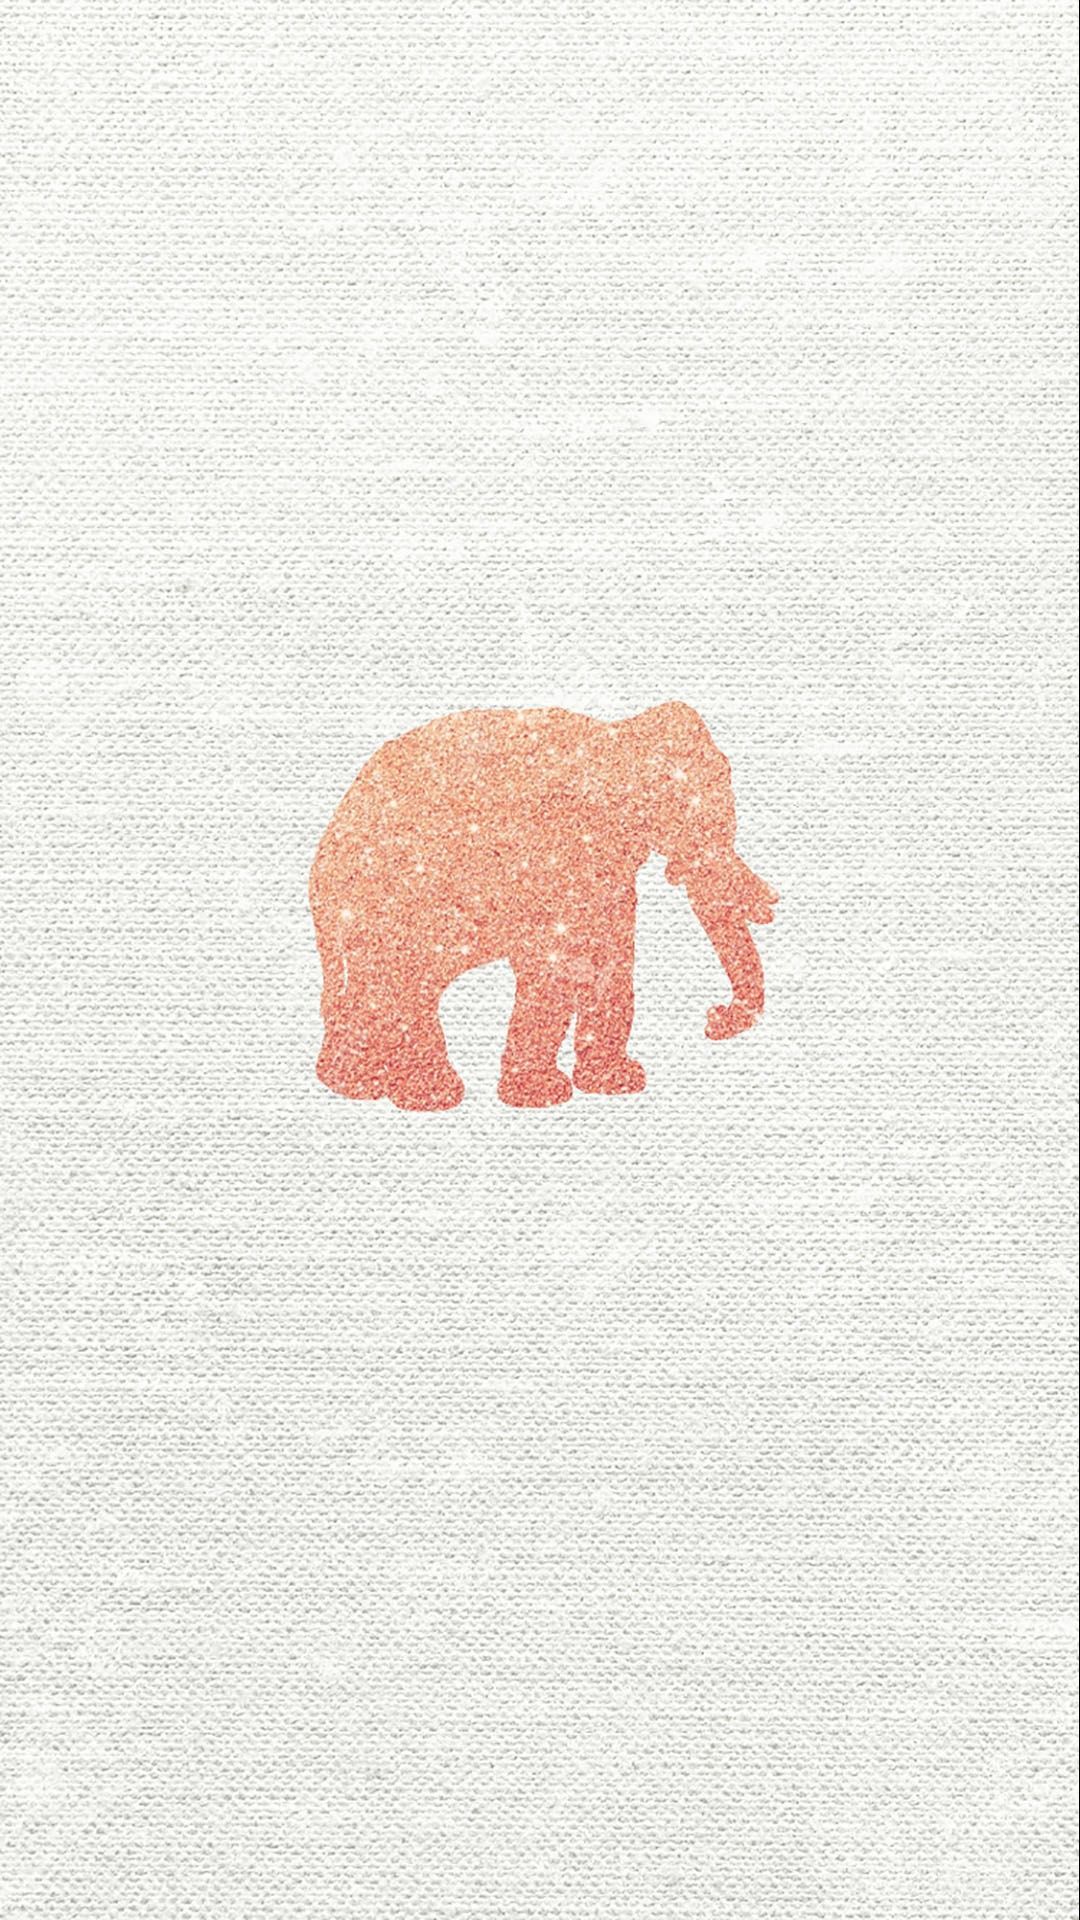 Iphone wallpaper  elephants  Elephant iphone wallpaper Elephant wallpaper  Elephant phone wallpaper